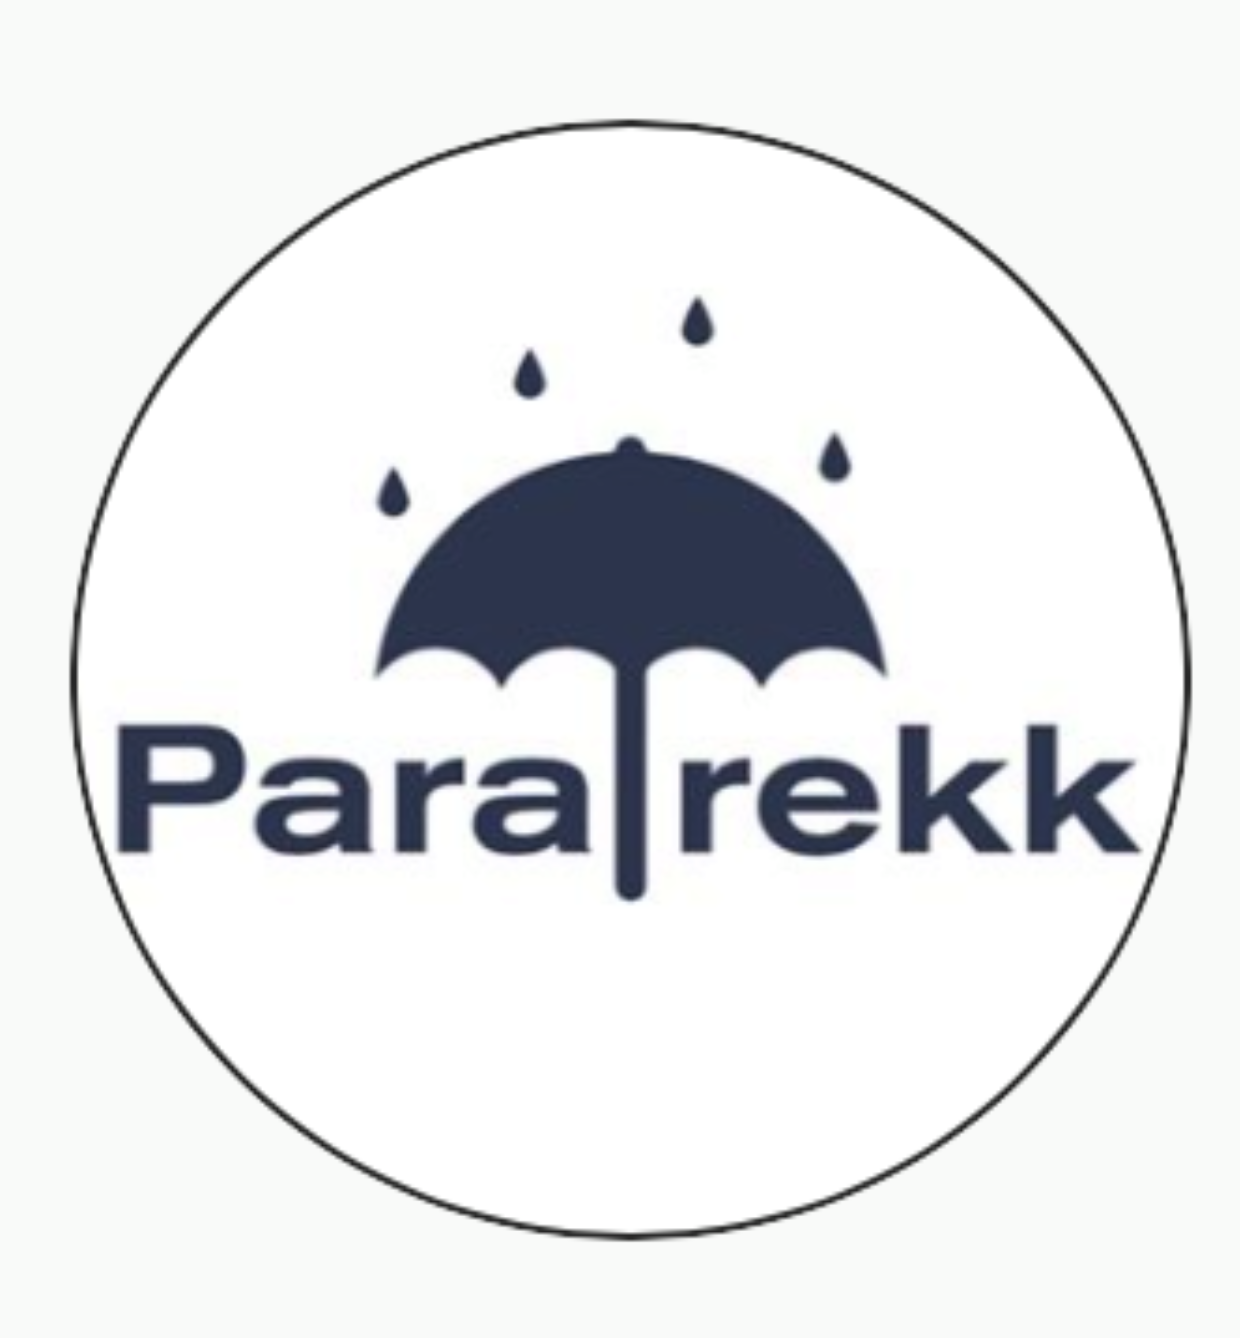 Paratrekk UB logo